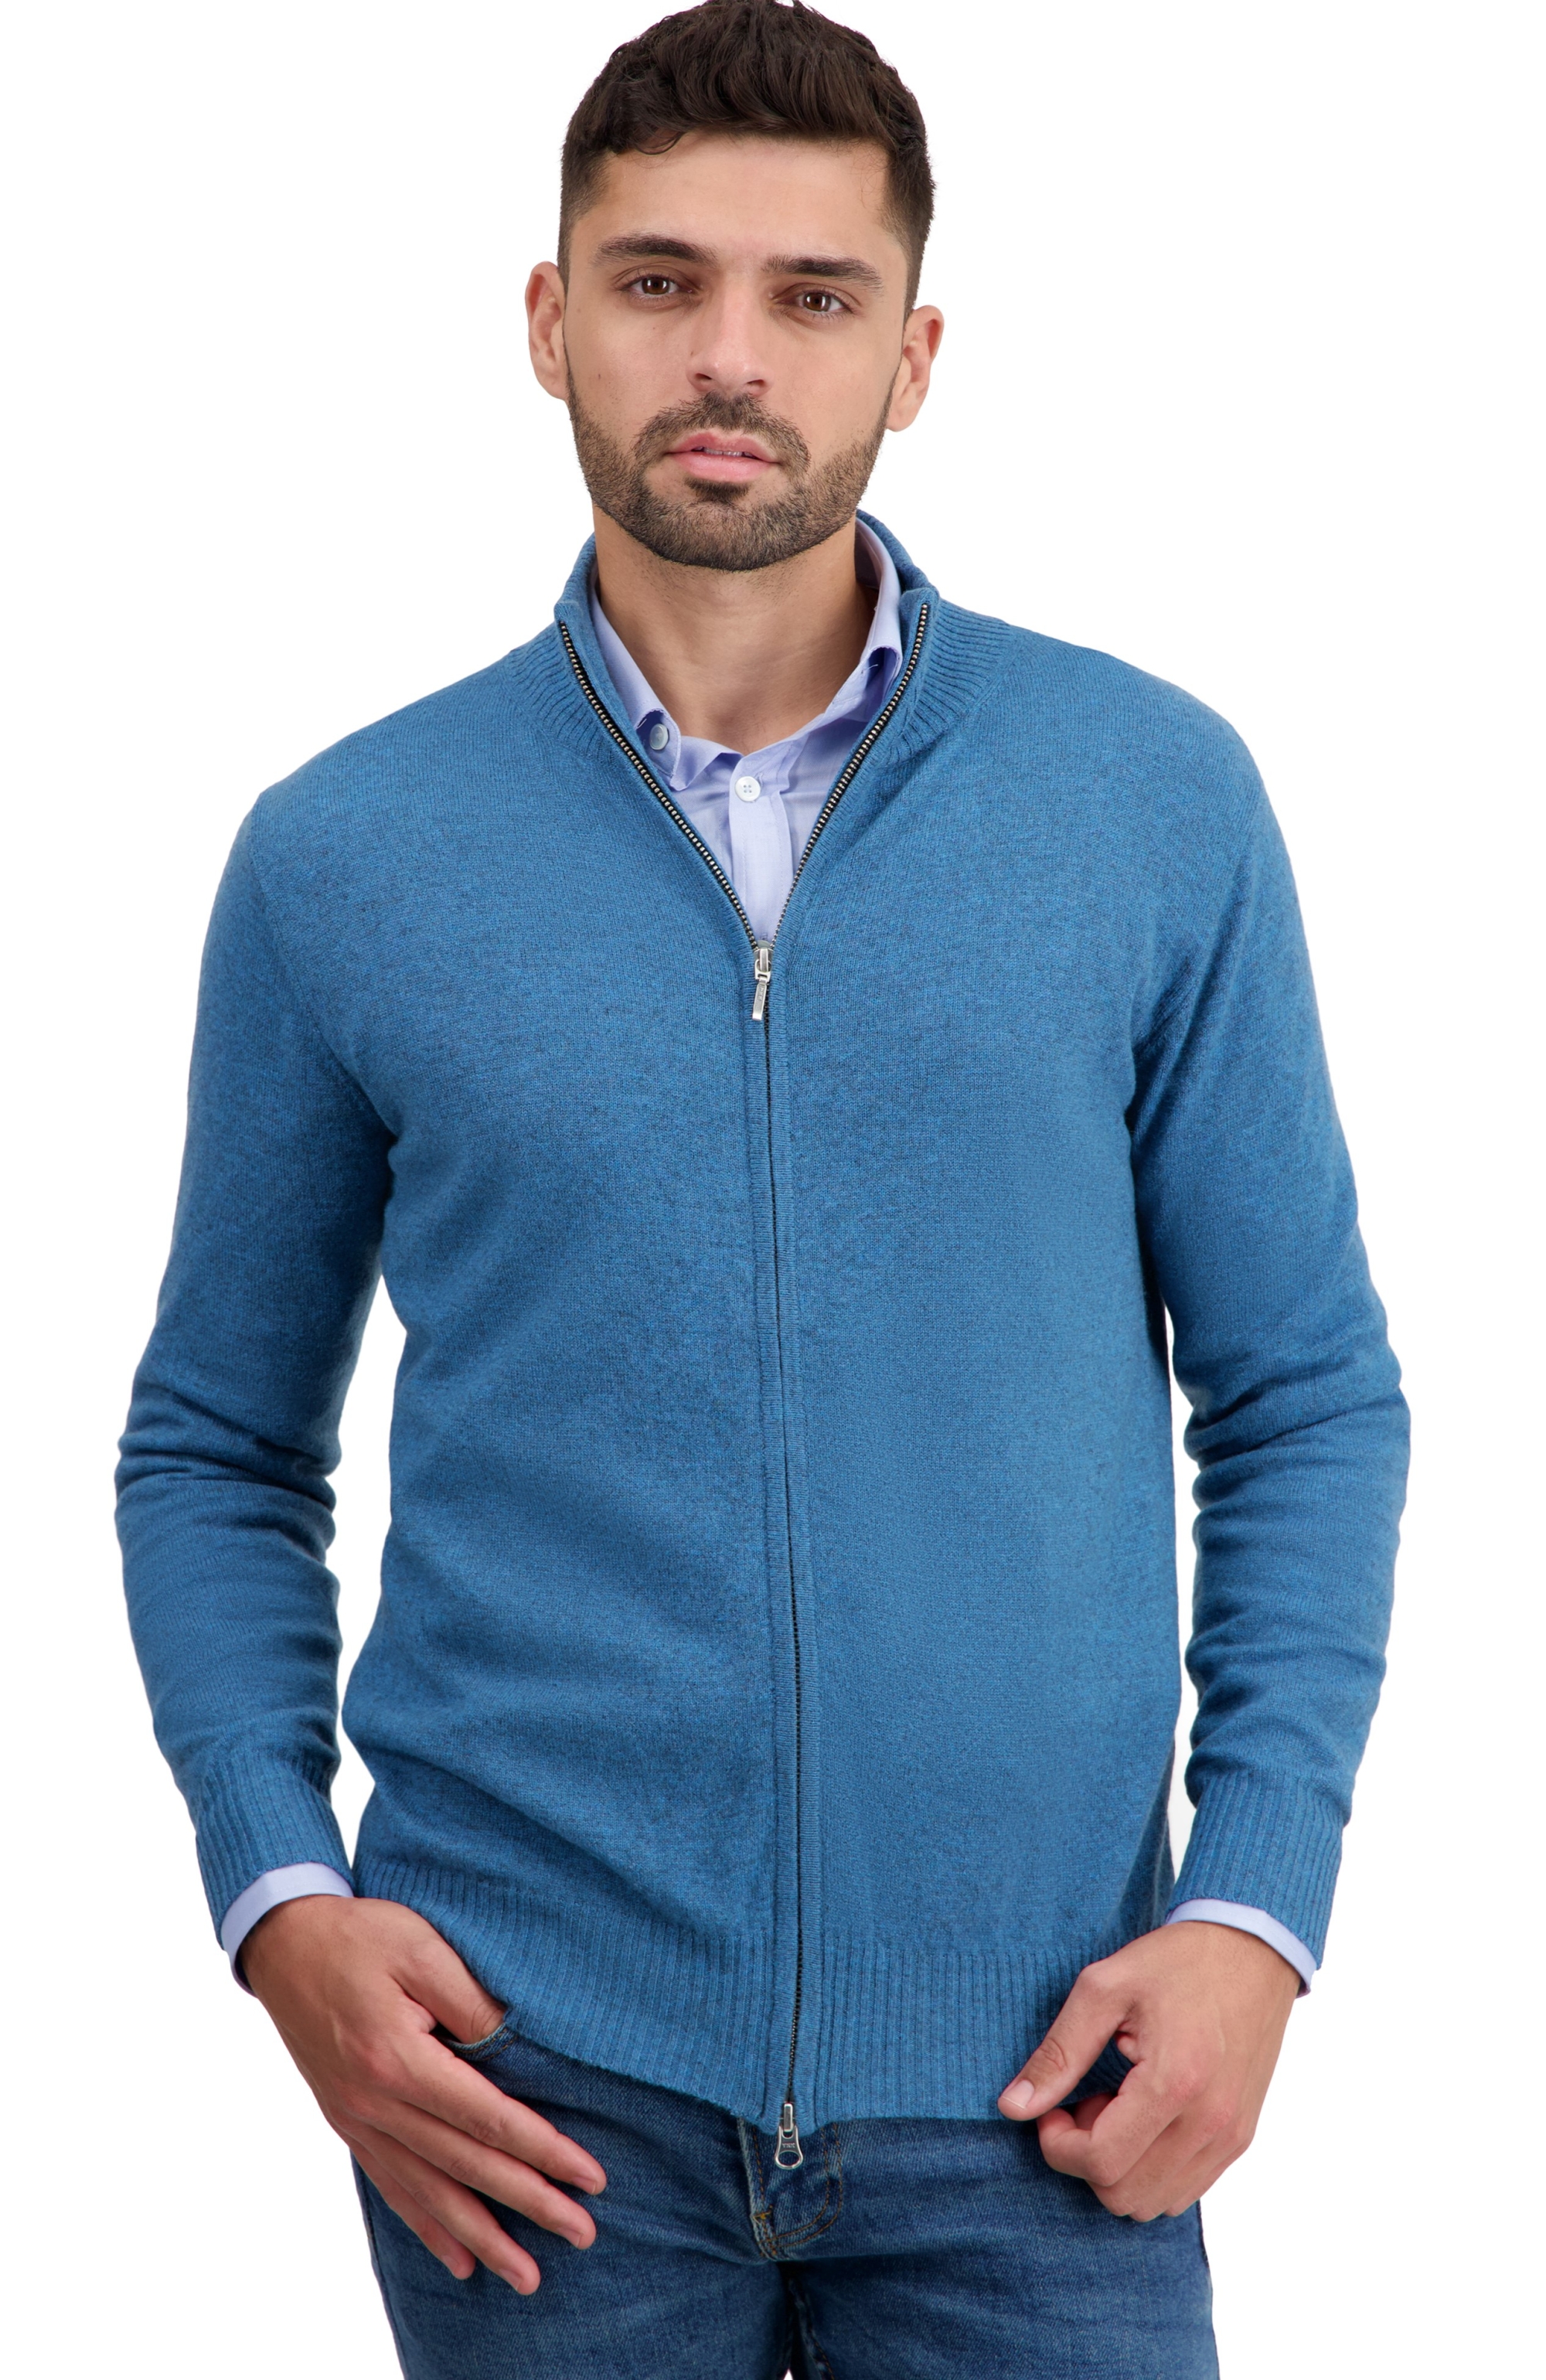 Cashmere men waistcoat sleeveless sweaters thobias first manor blue m